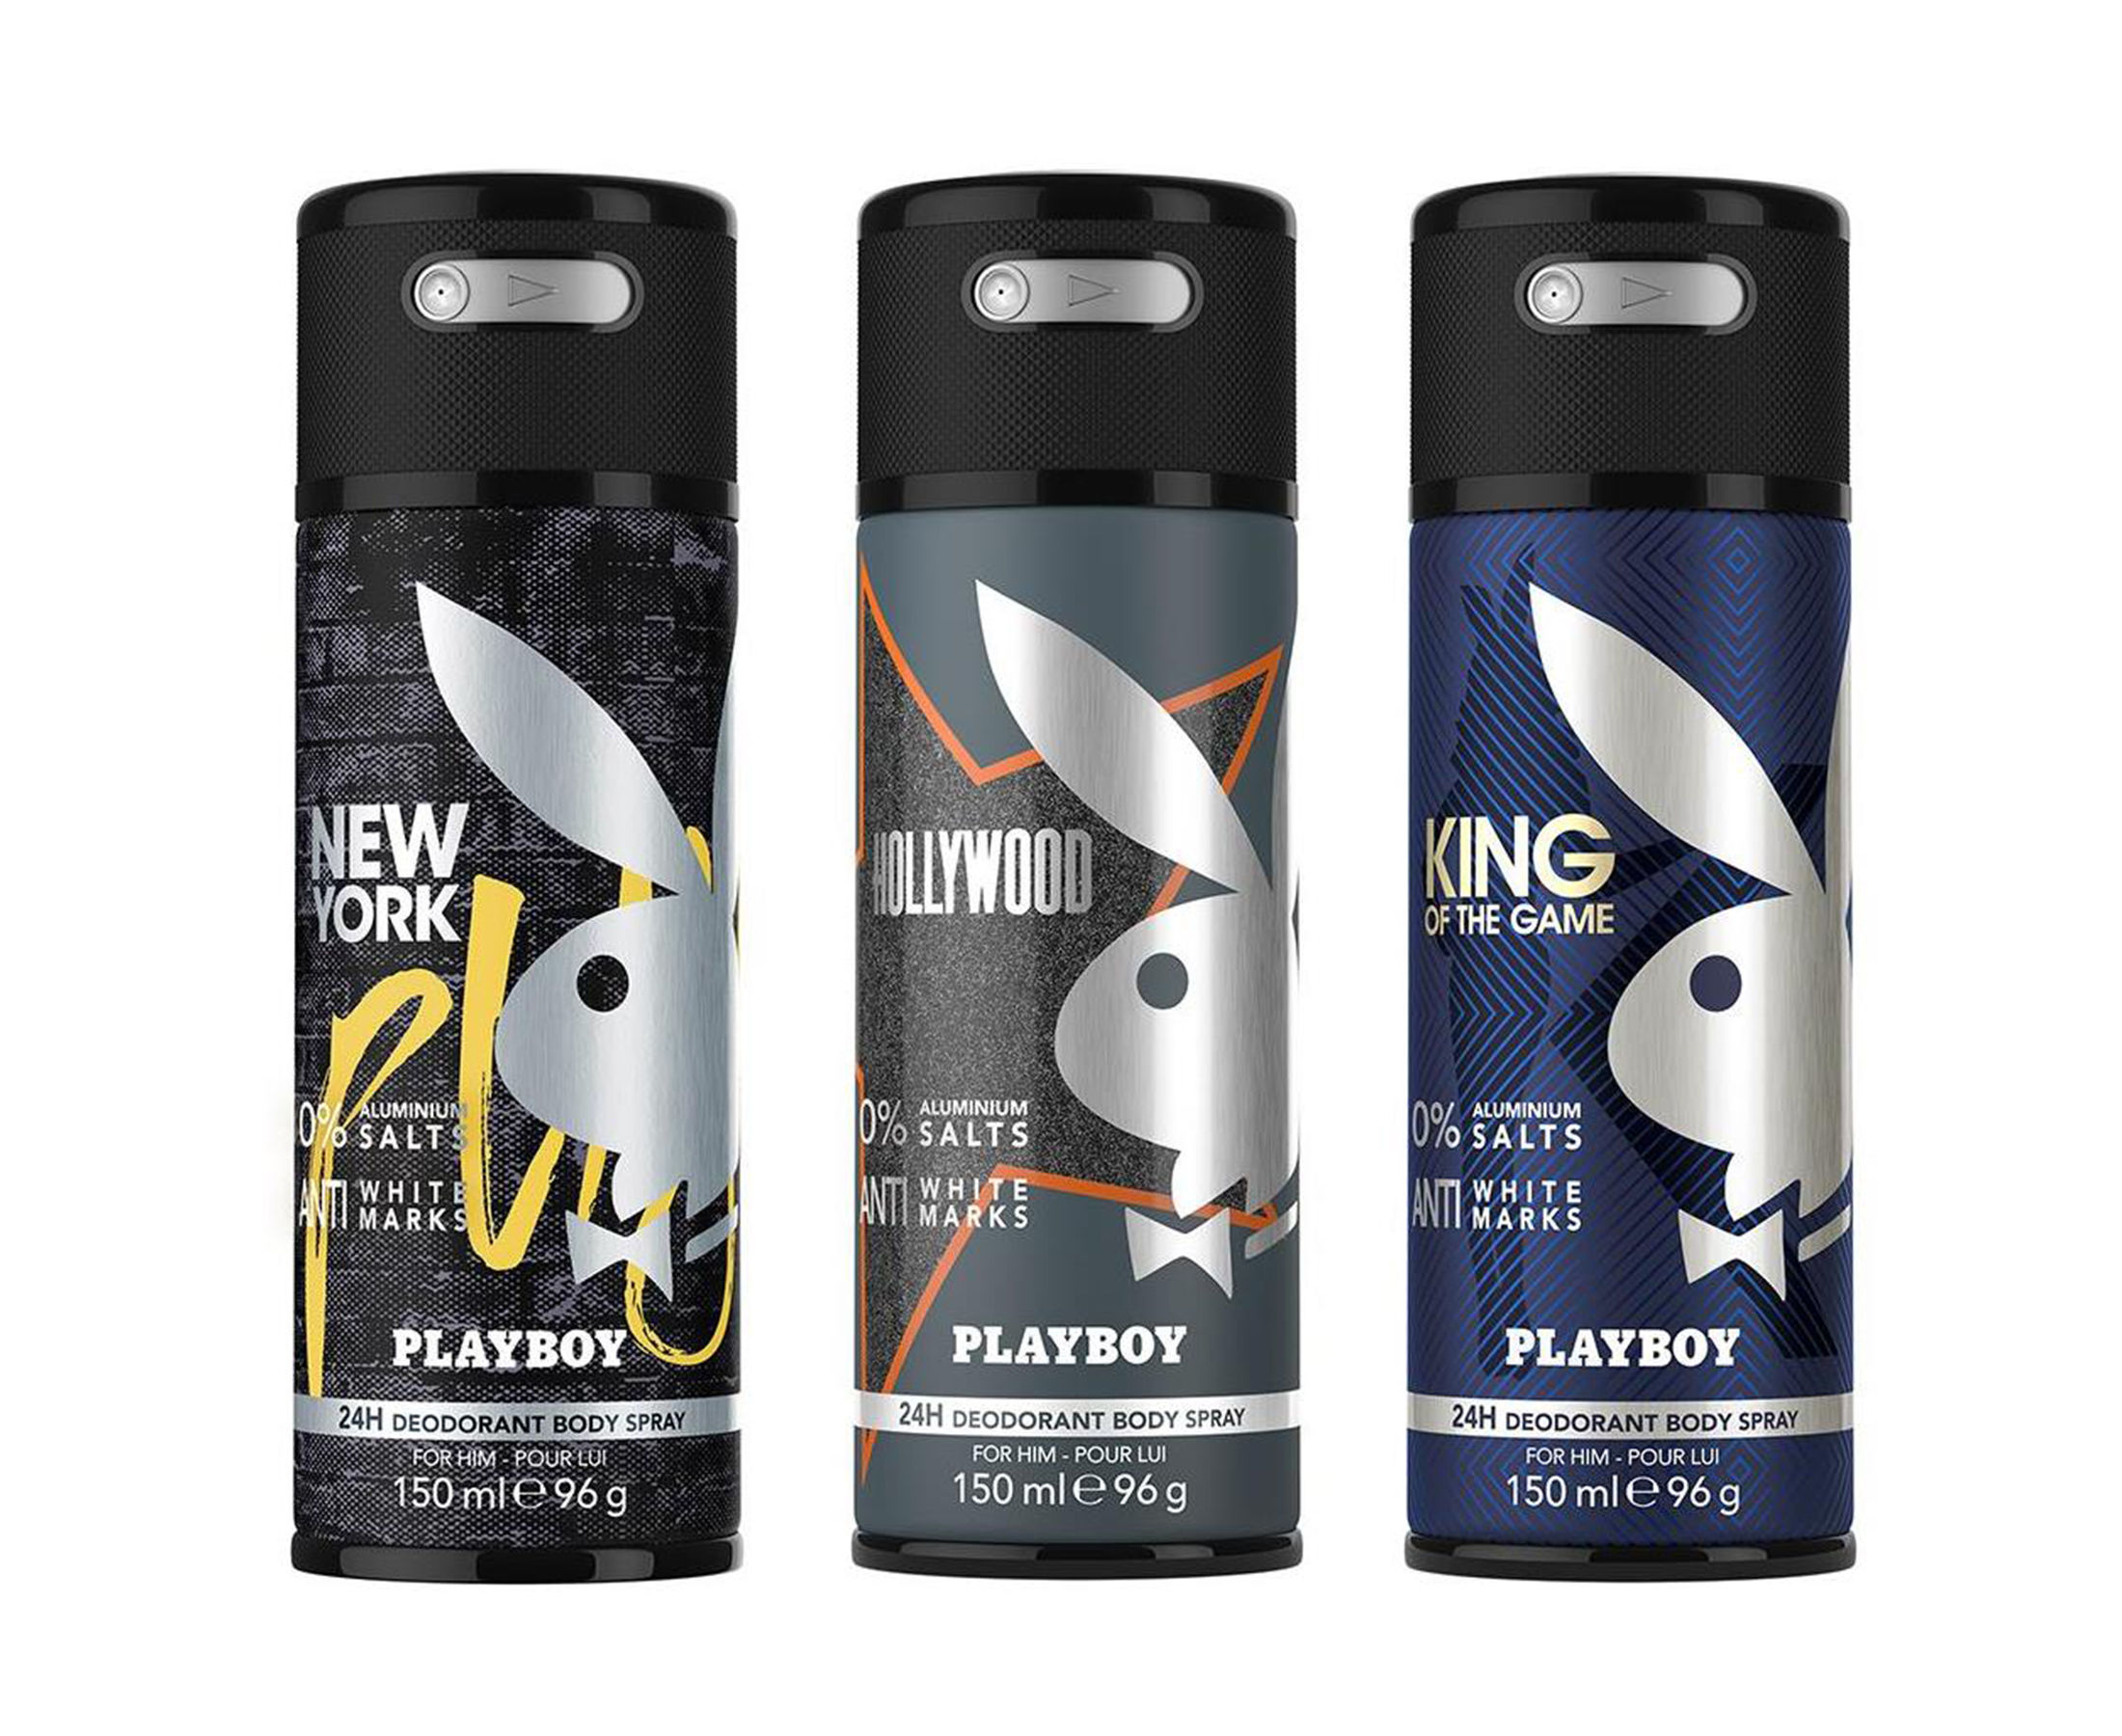 Playboy Deodorant Price Shop - deportesinc.com 1688257924